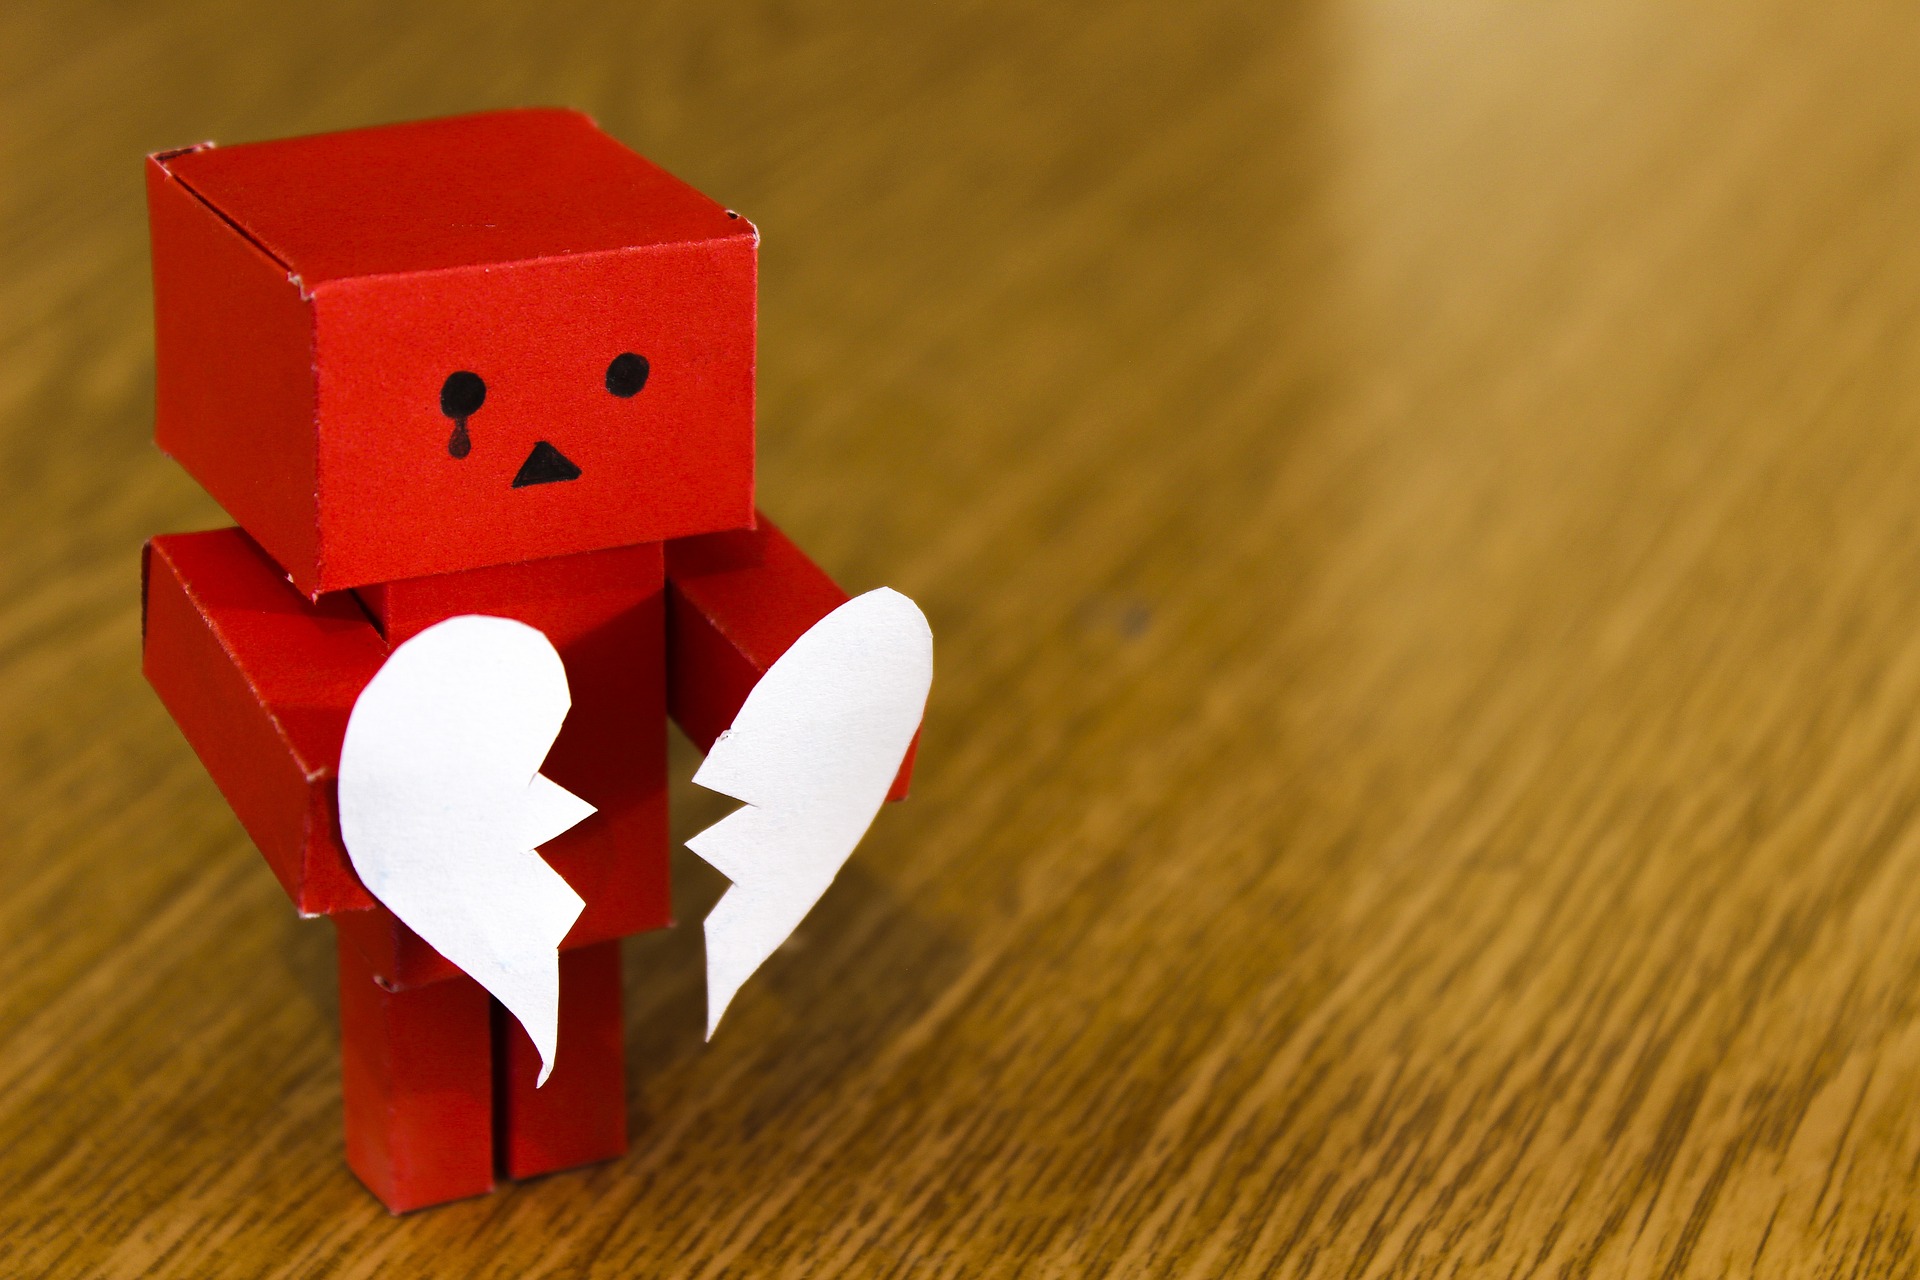 A sad little red paper robot holds a broken white paper heart